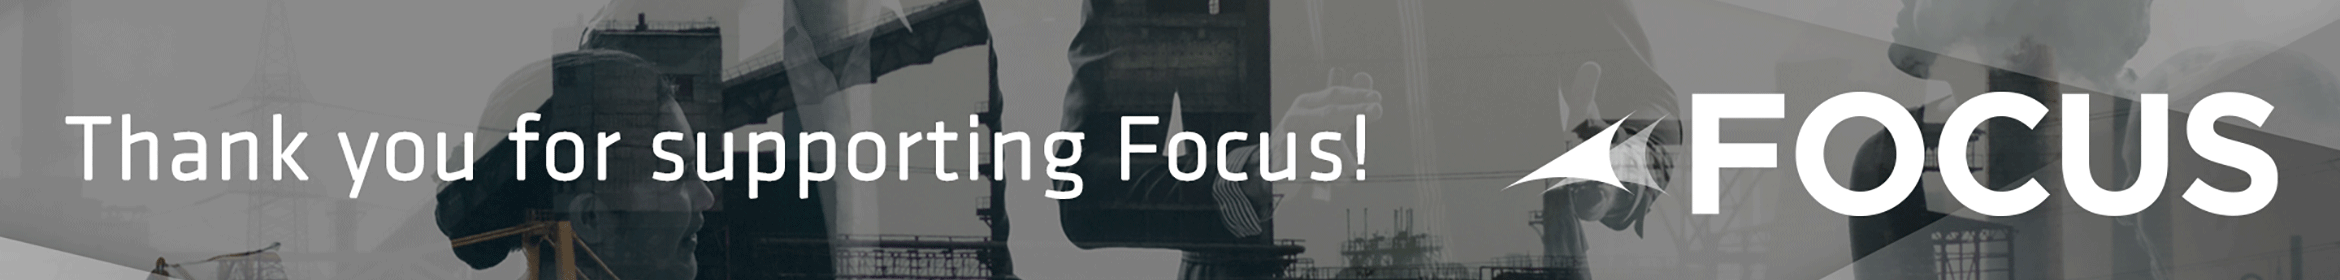 Focus 2018 Main banner